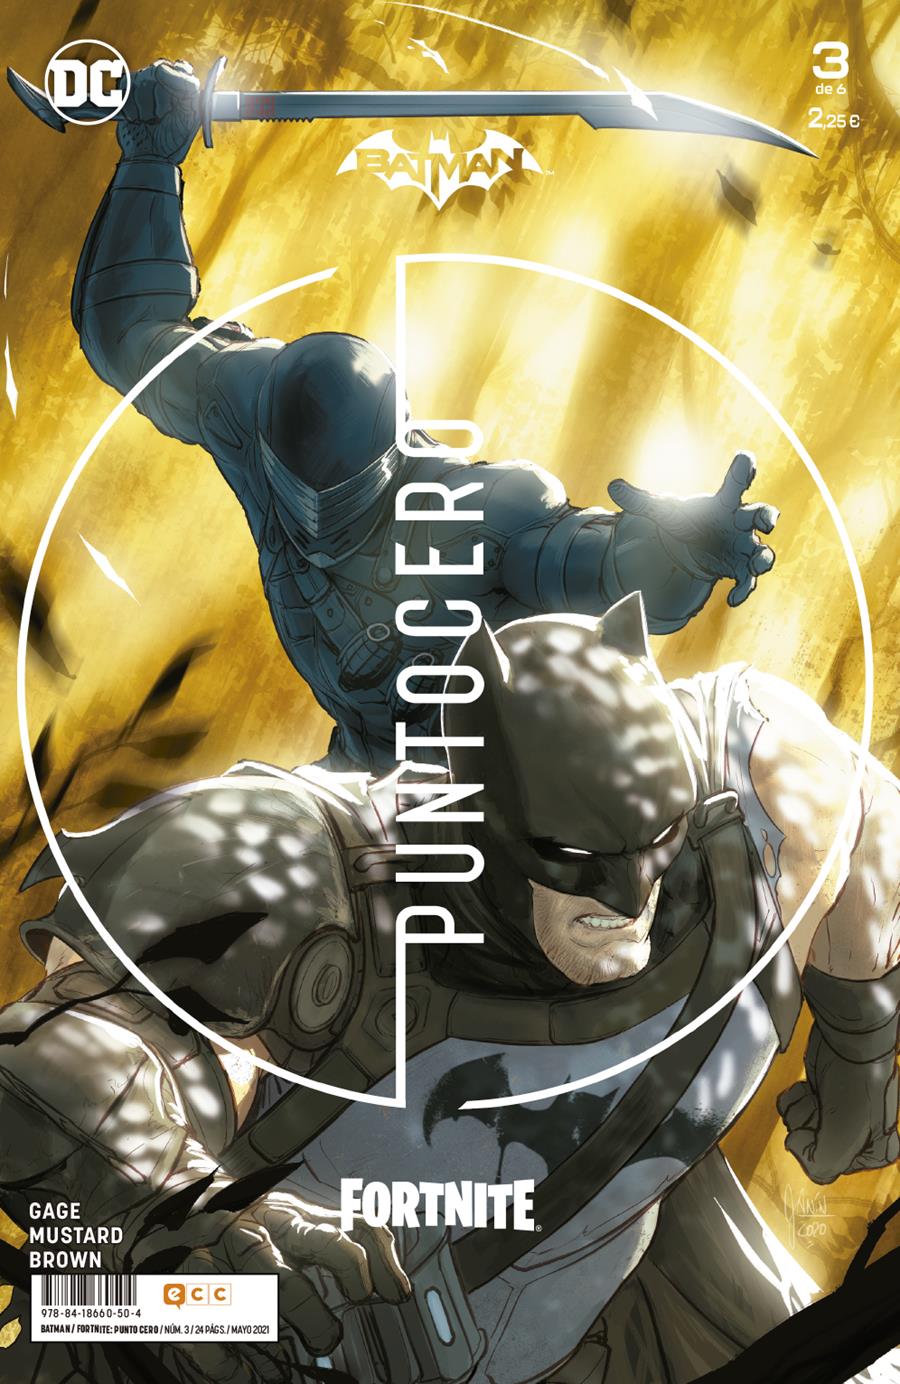 Batman/Fortnite: Punto cero núm. 3 de 6 | N0421-ECC92 | Christos N. Gage, Donald Mustard, Reilly Brown | Terra de Còmic - Tu tienda de cómics online especializada en cómics, manga y merchandising